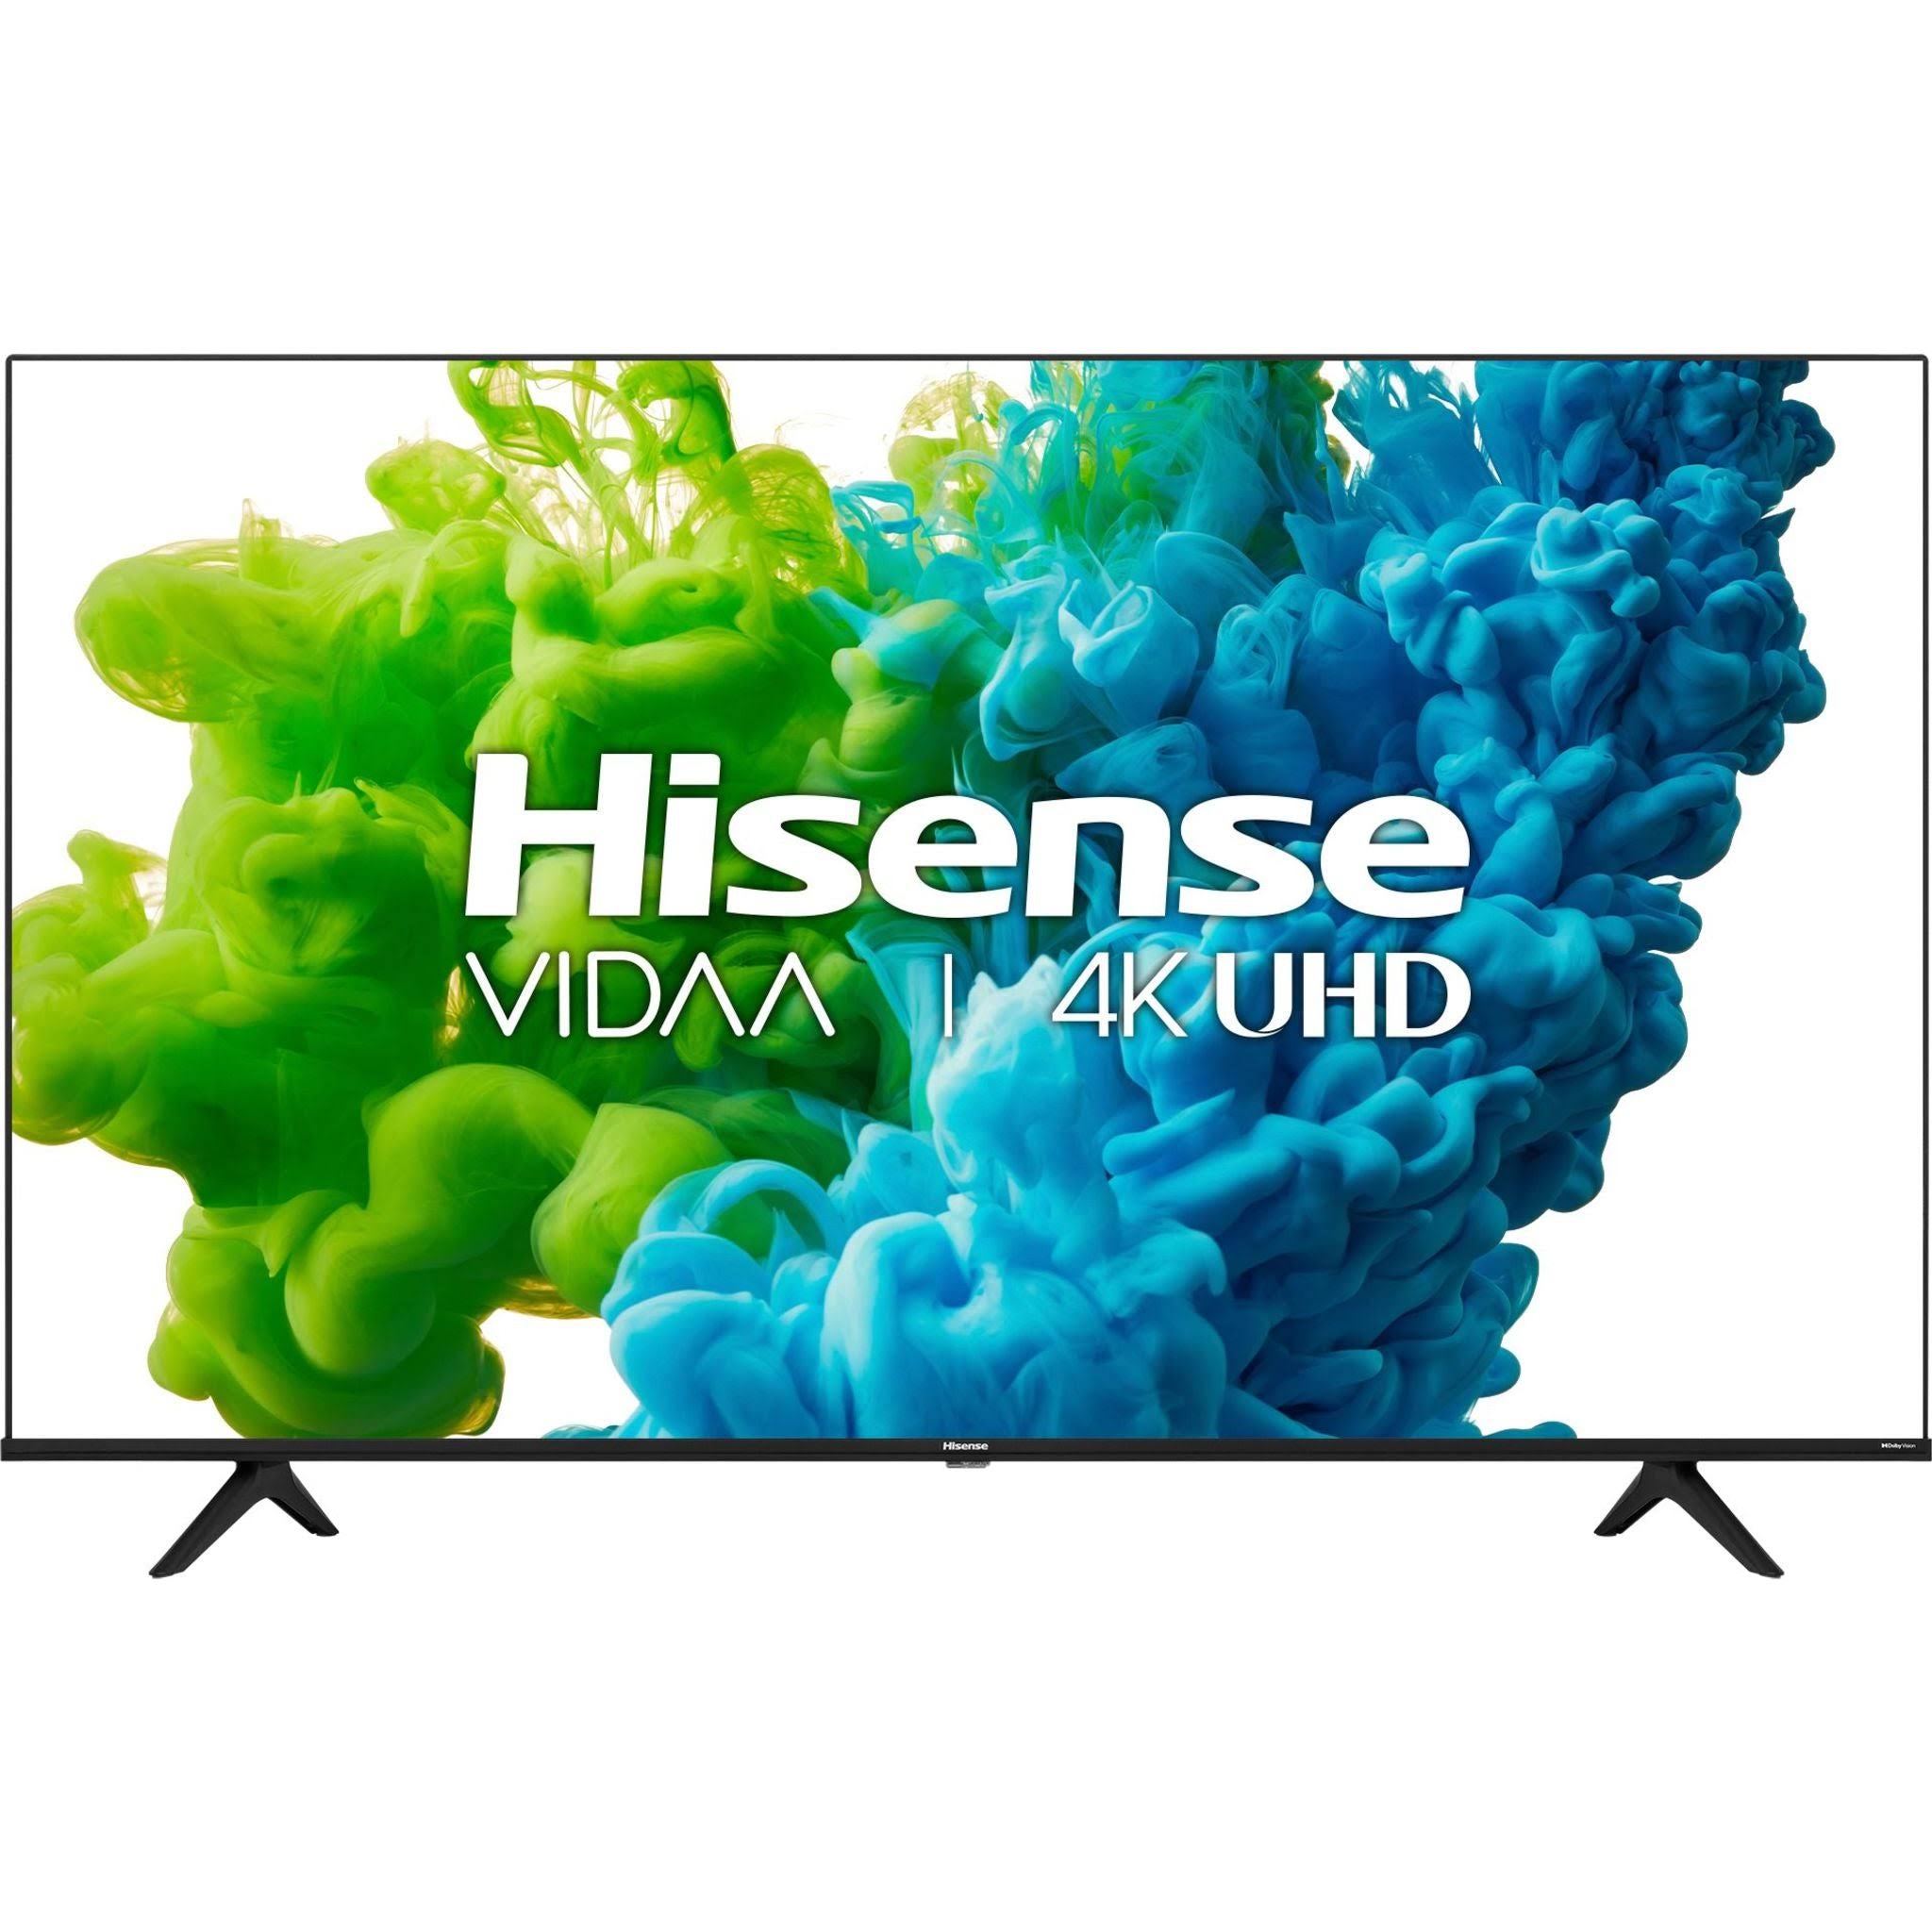 Hisense 50" VIDAA Smart 4K UHD Television - 50A6GV